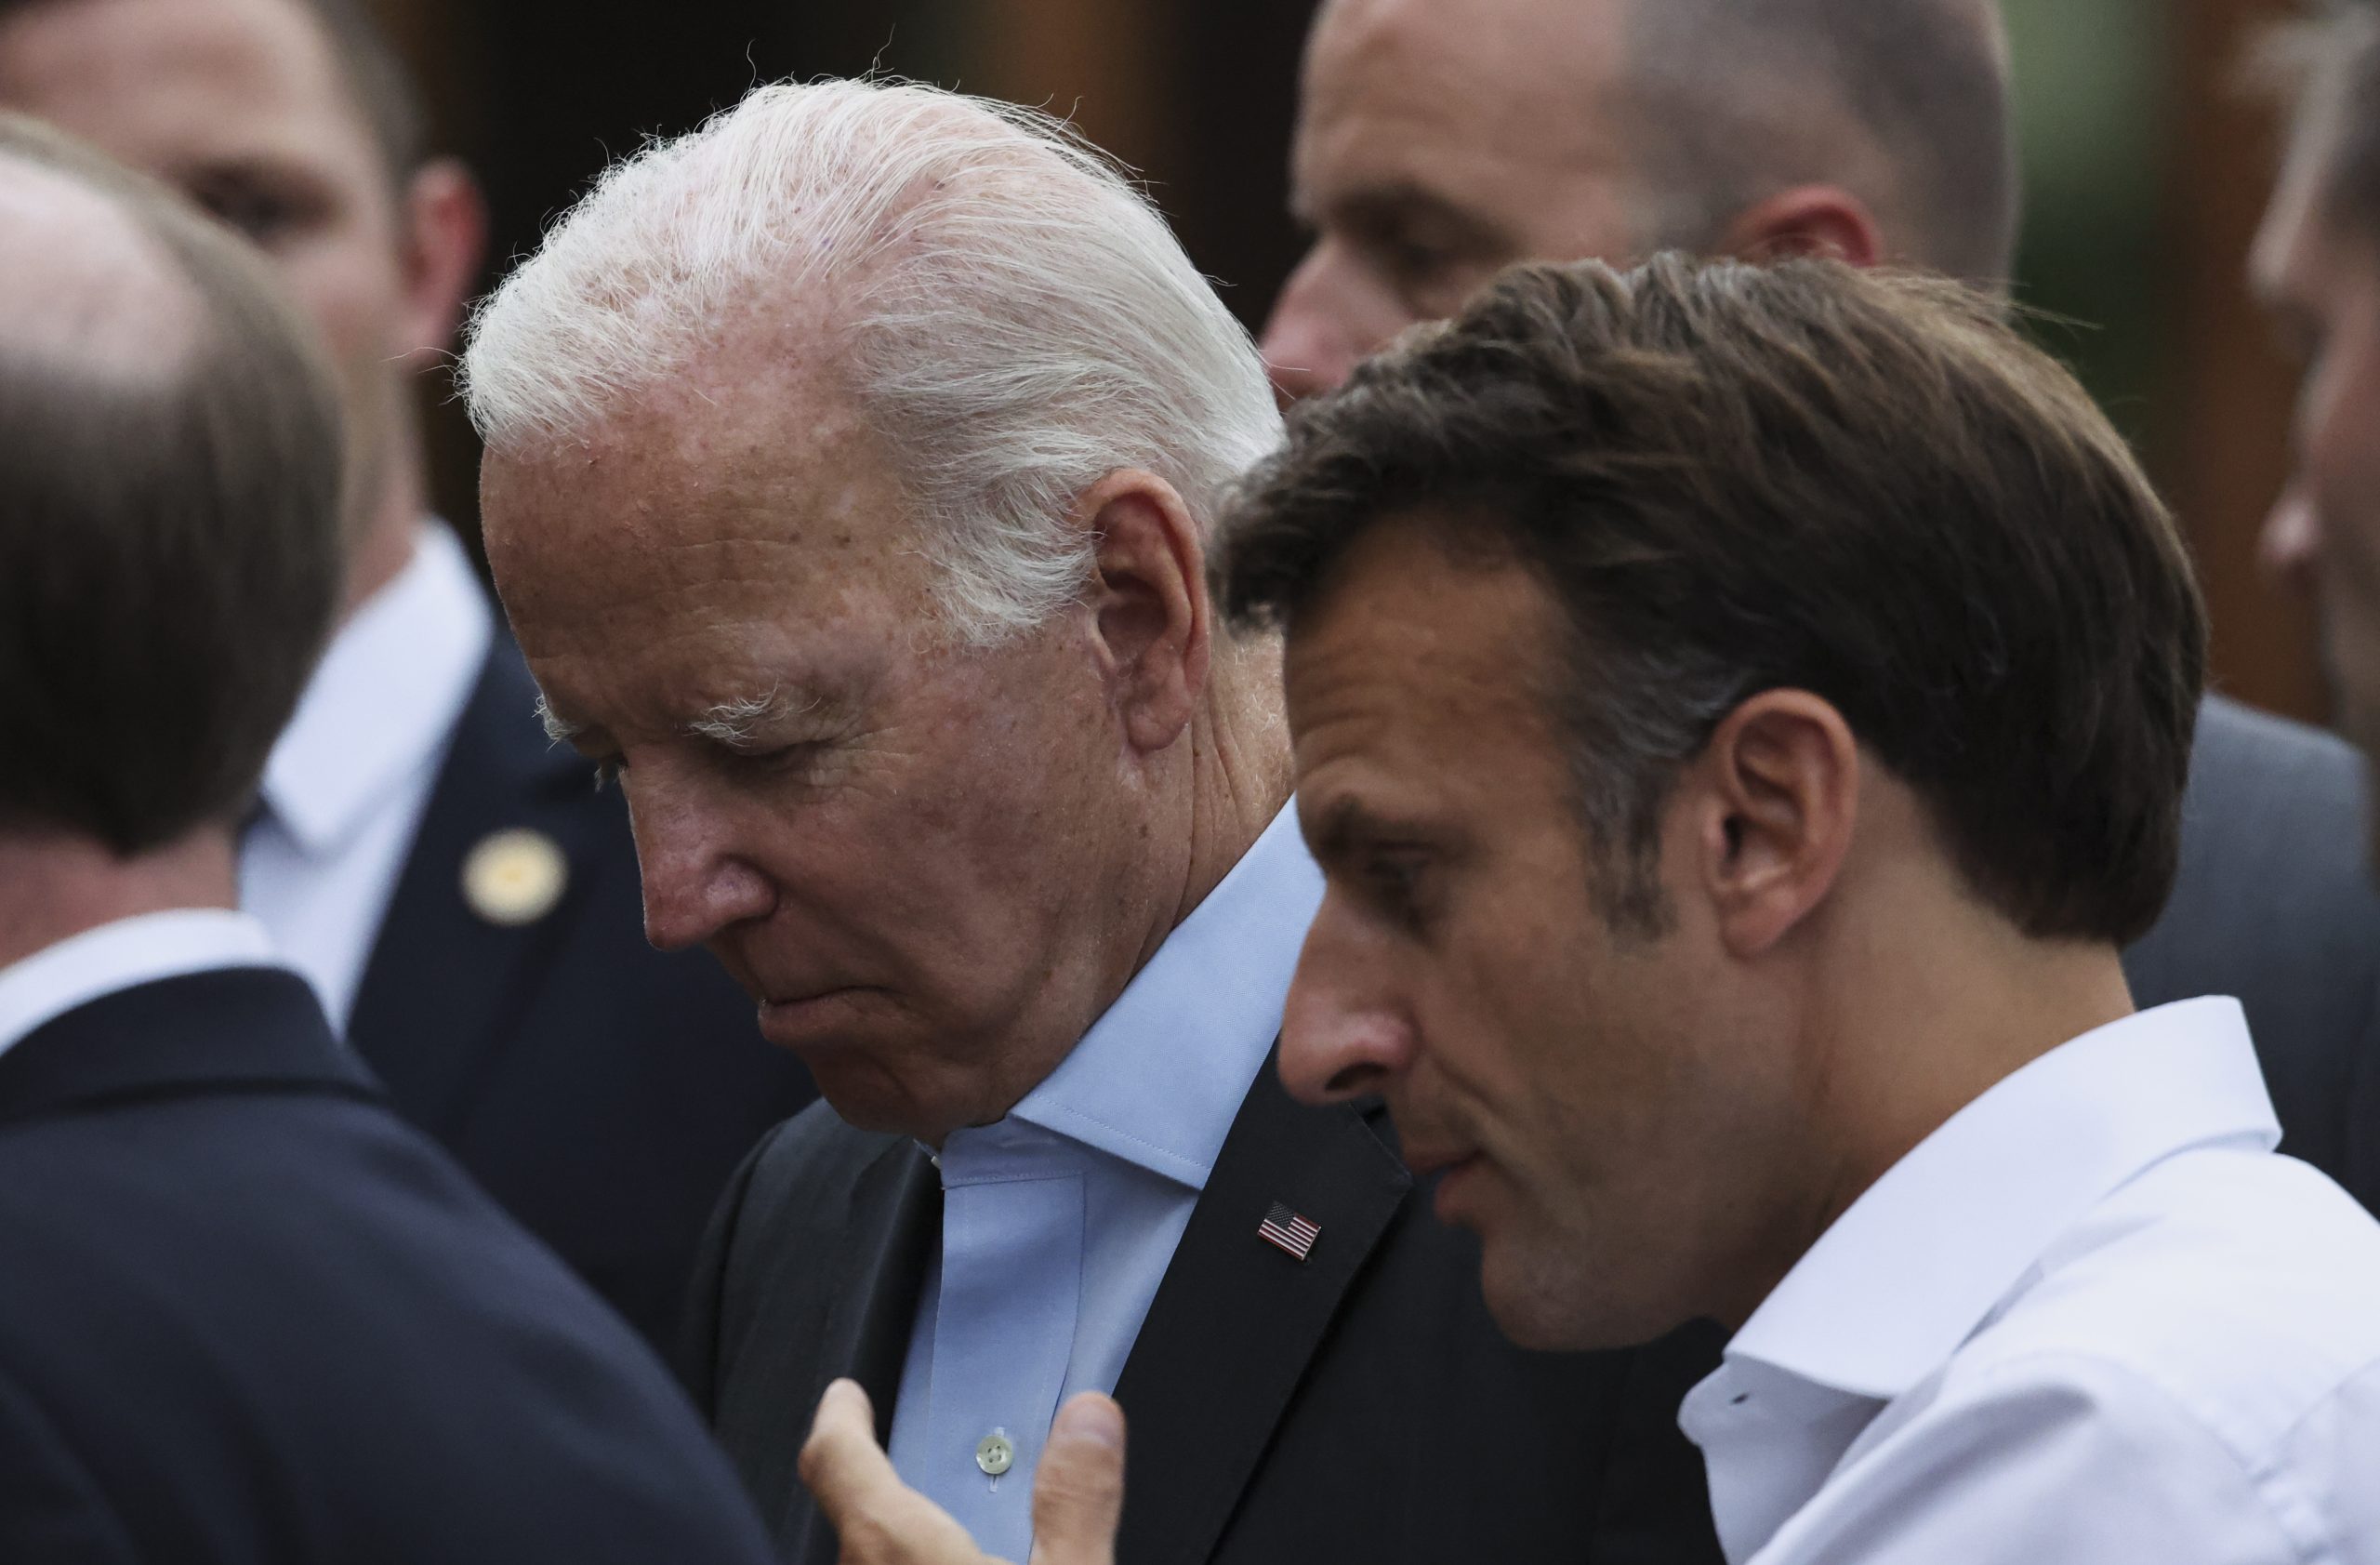 Biden enters a new type of tango with Paris